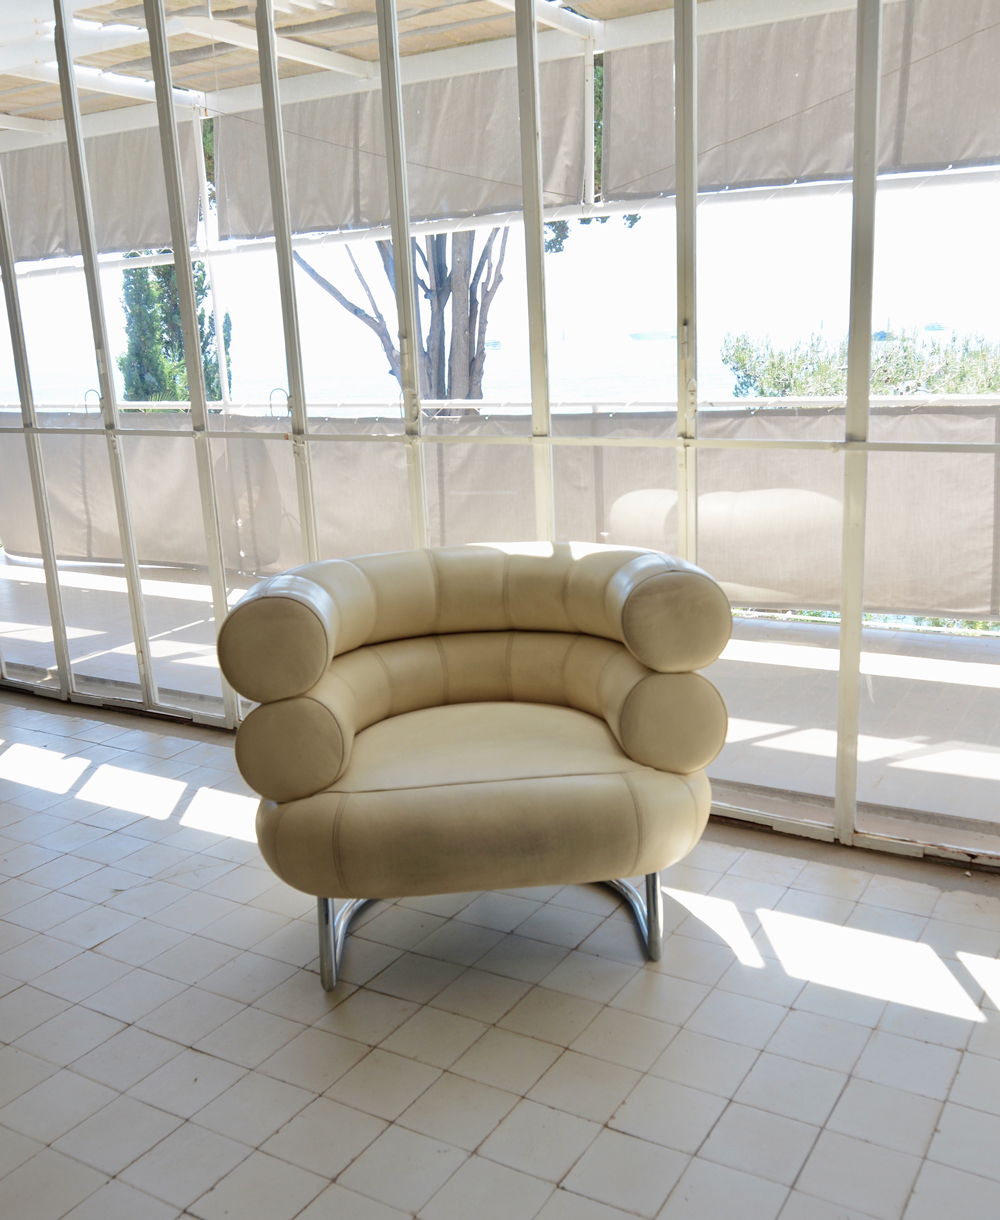 Eileen Gray's furniture design inn her Modernist villa E-1027